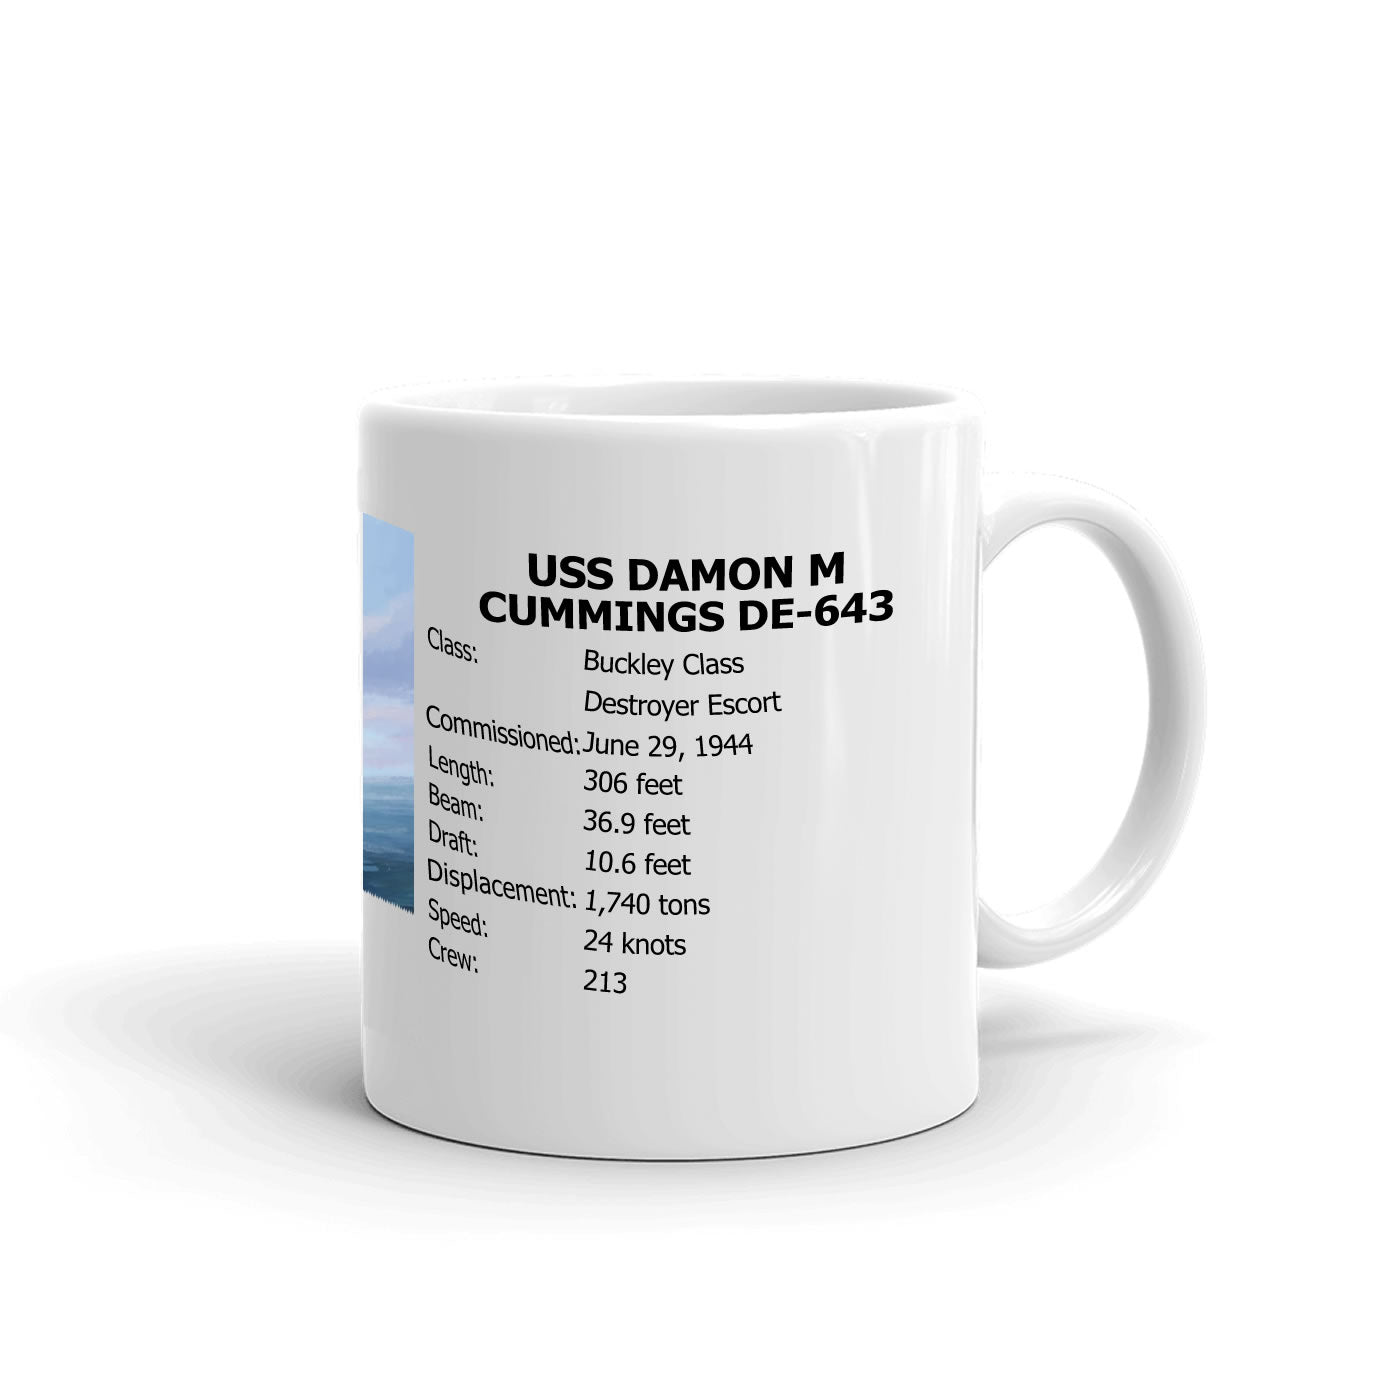 USS Damon M Cummings DE-643 Coffee Cup Mug Right Handle